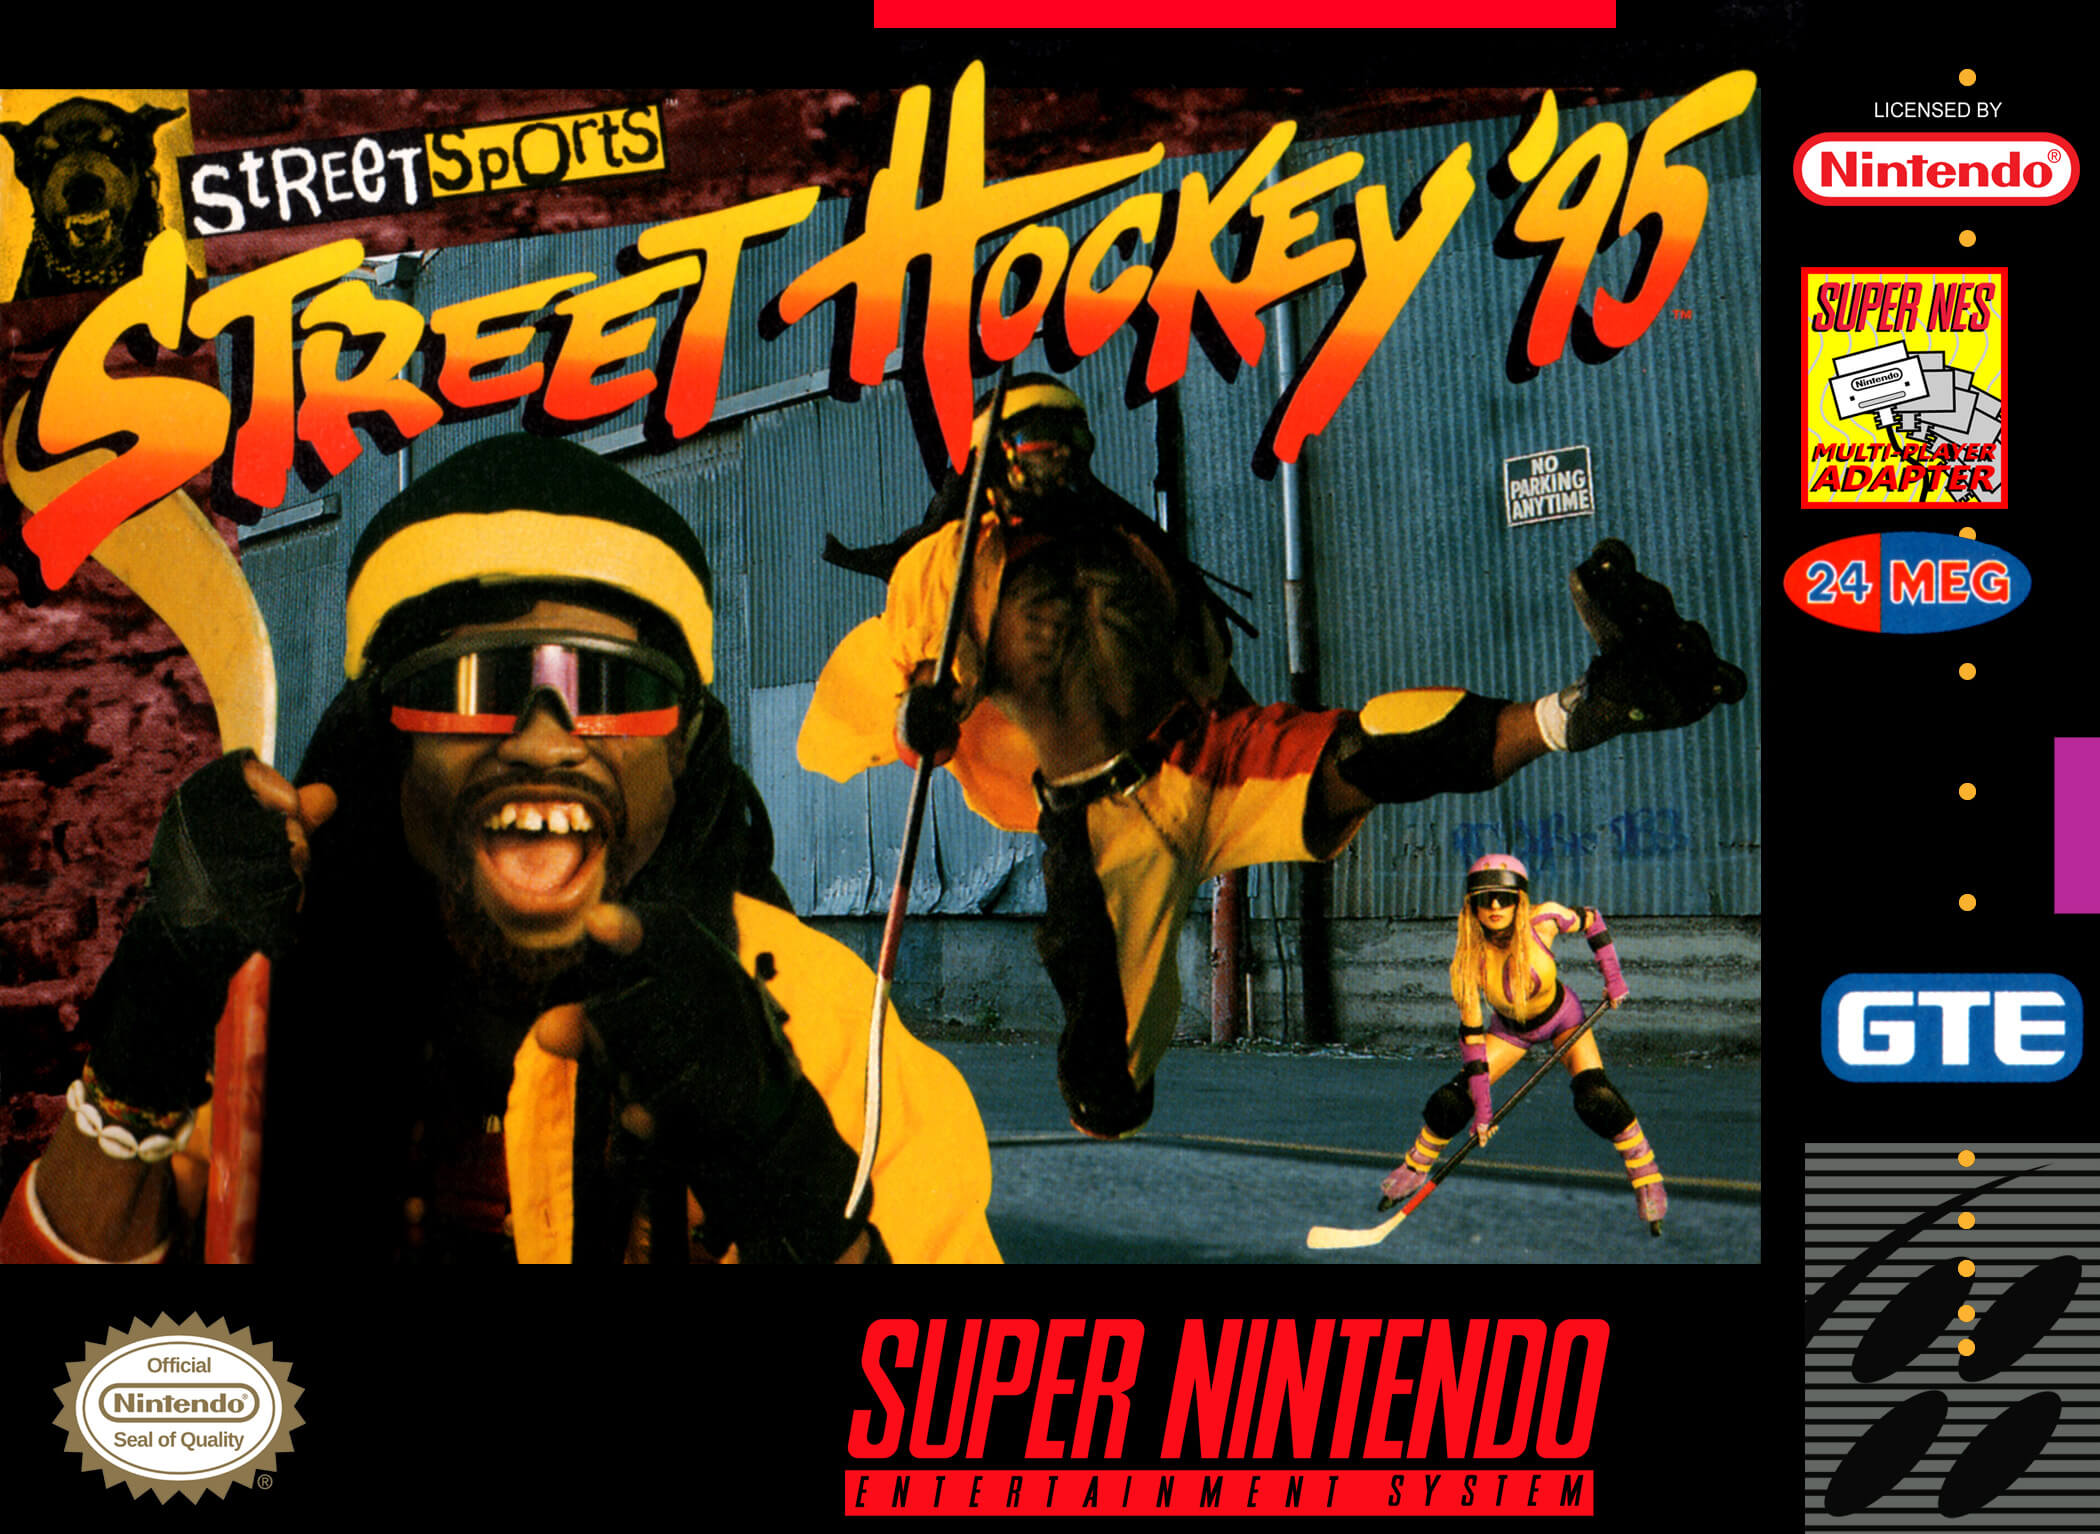 Street Sports: Street Hockey '95